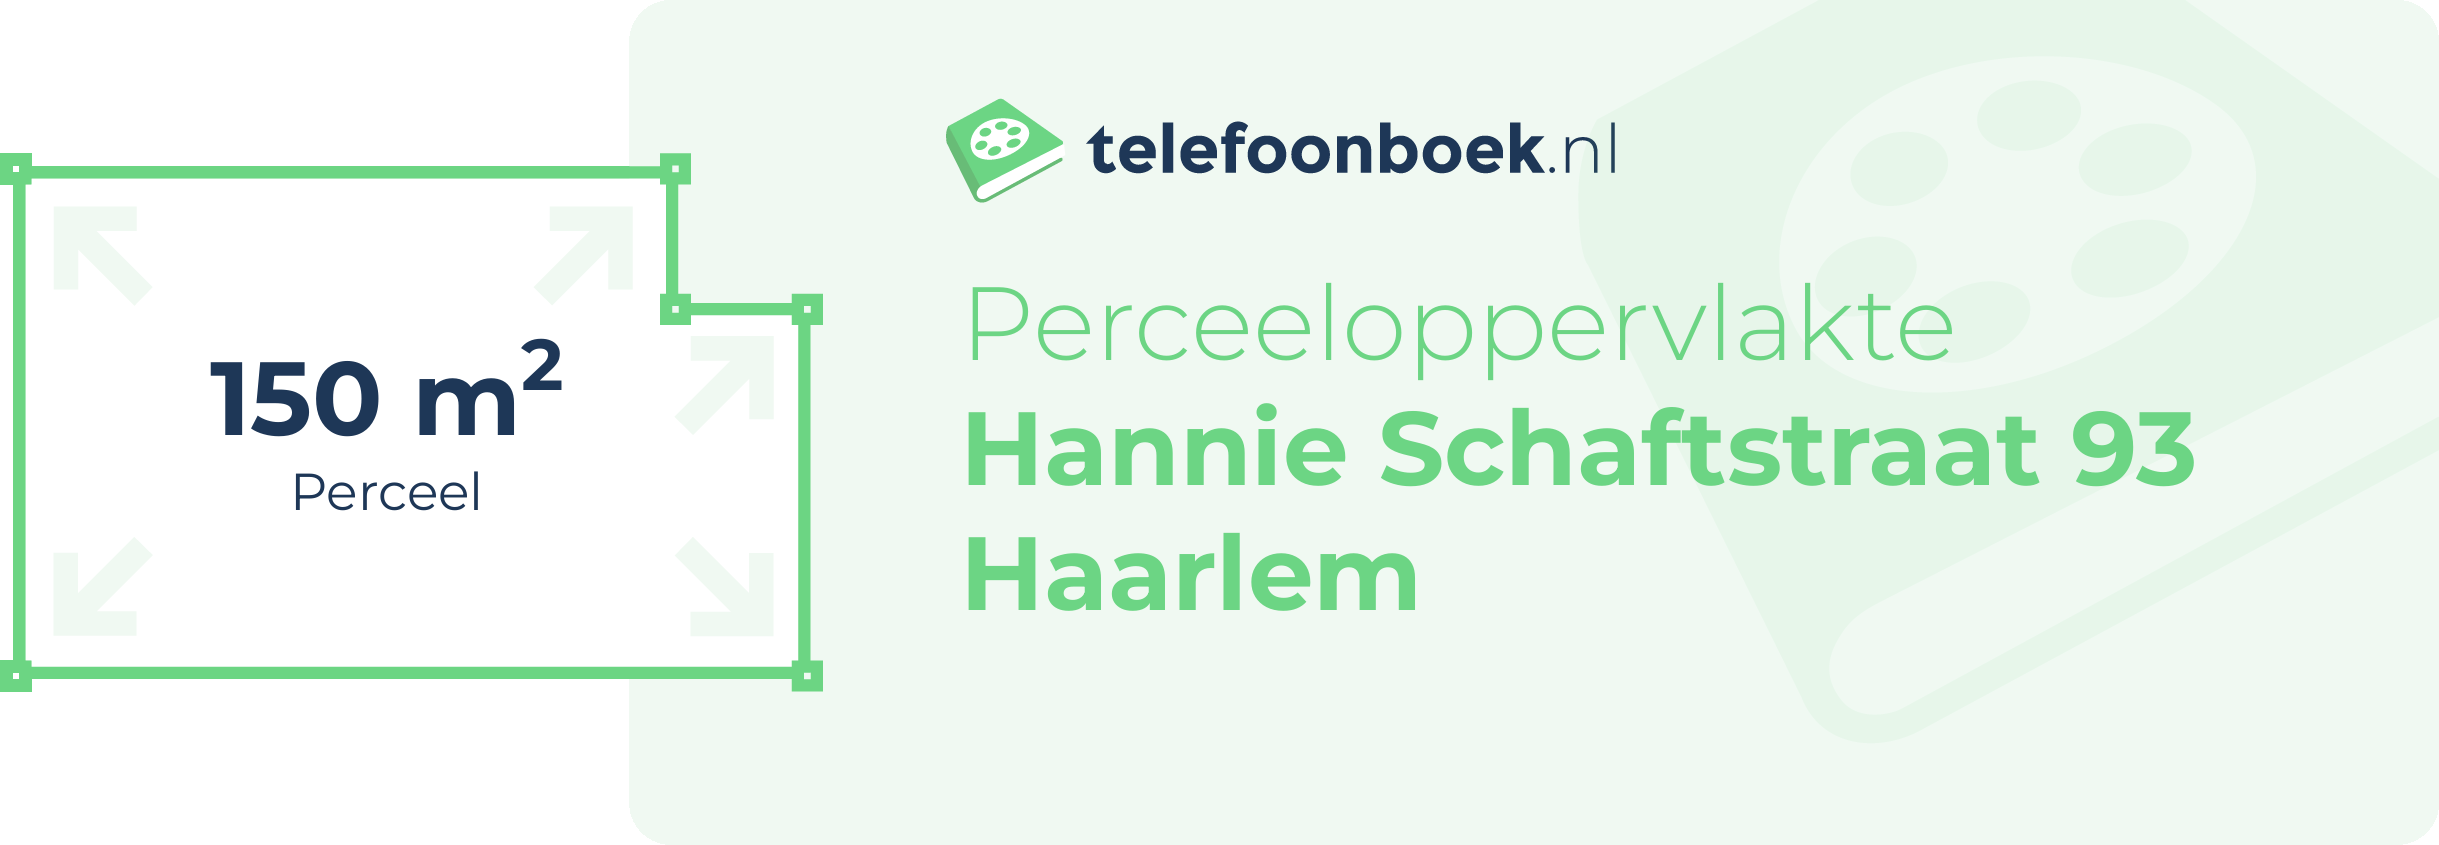 Perceeloppervlakte Hannie Schaftstraat 93 Haarlem